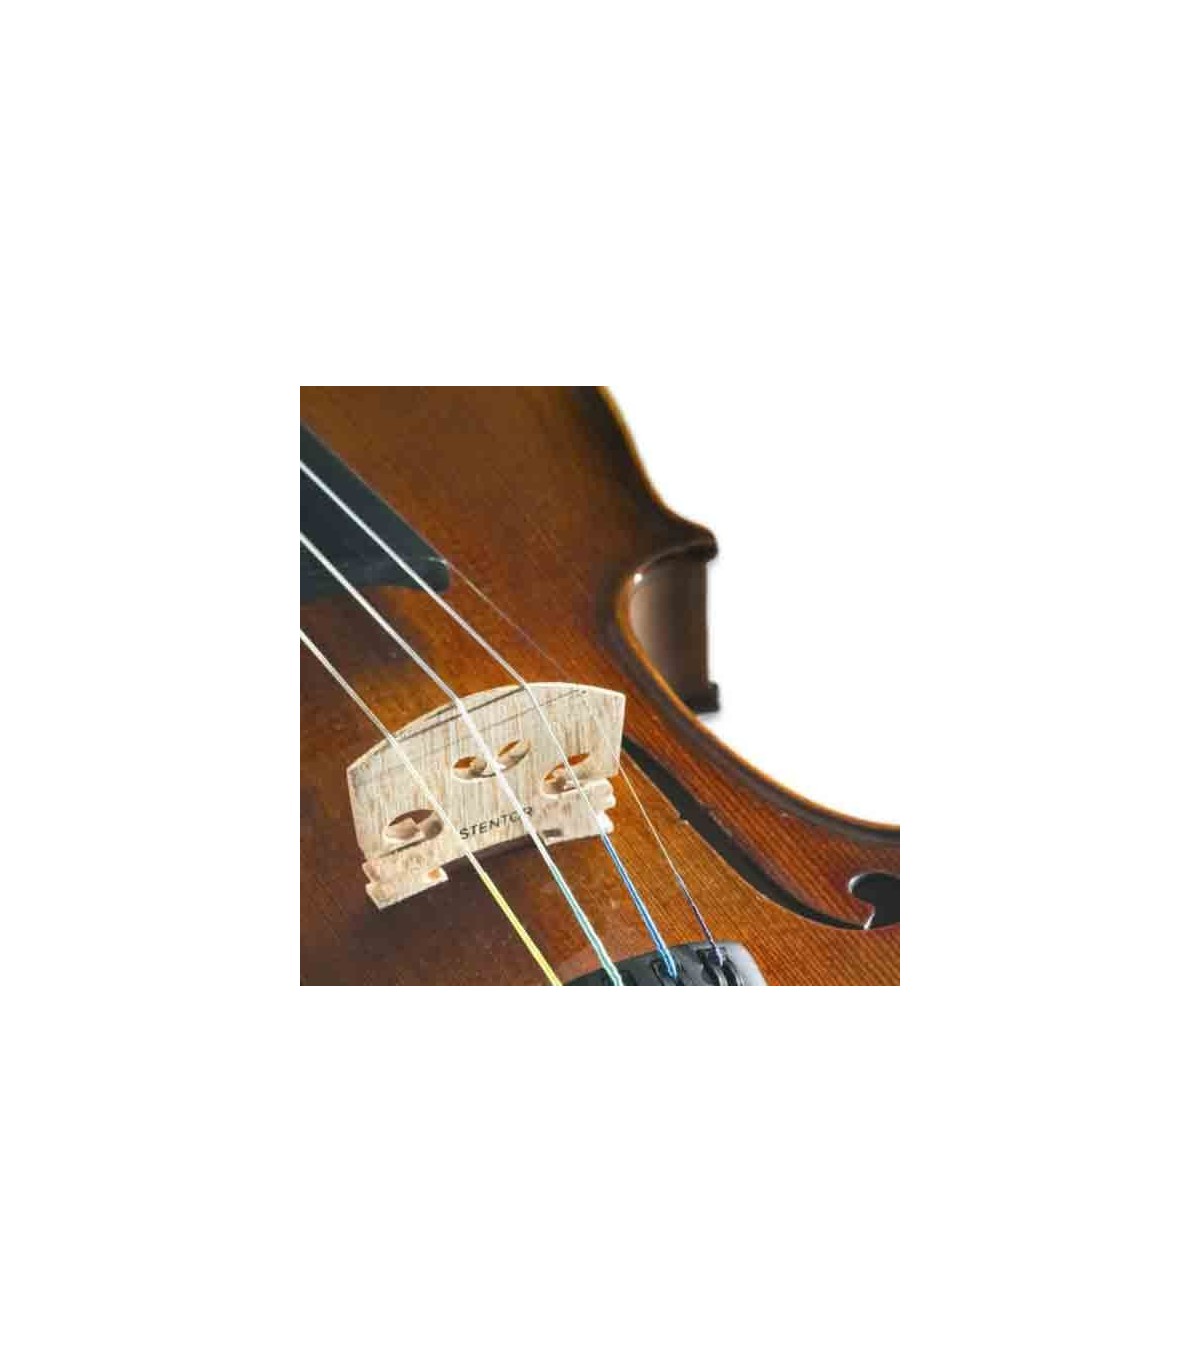 Stentor Student II 3/4 SH | Violin | Salão Musical - Musical Hall